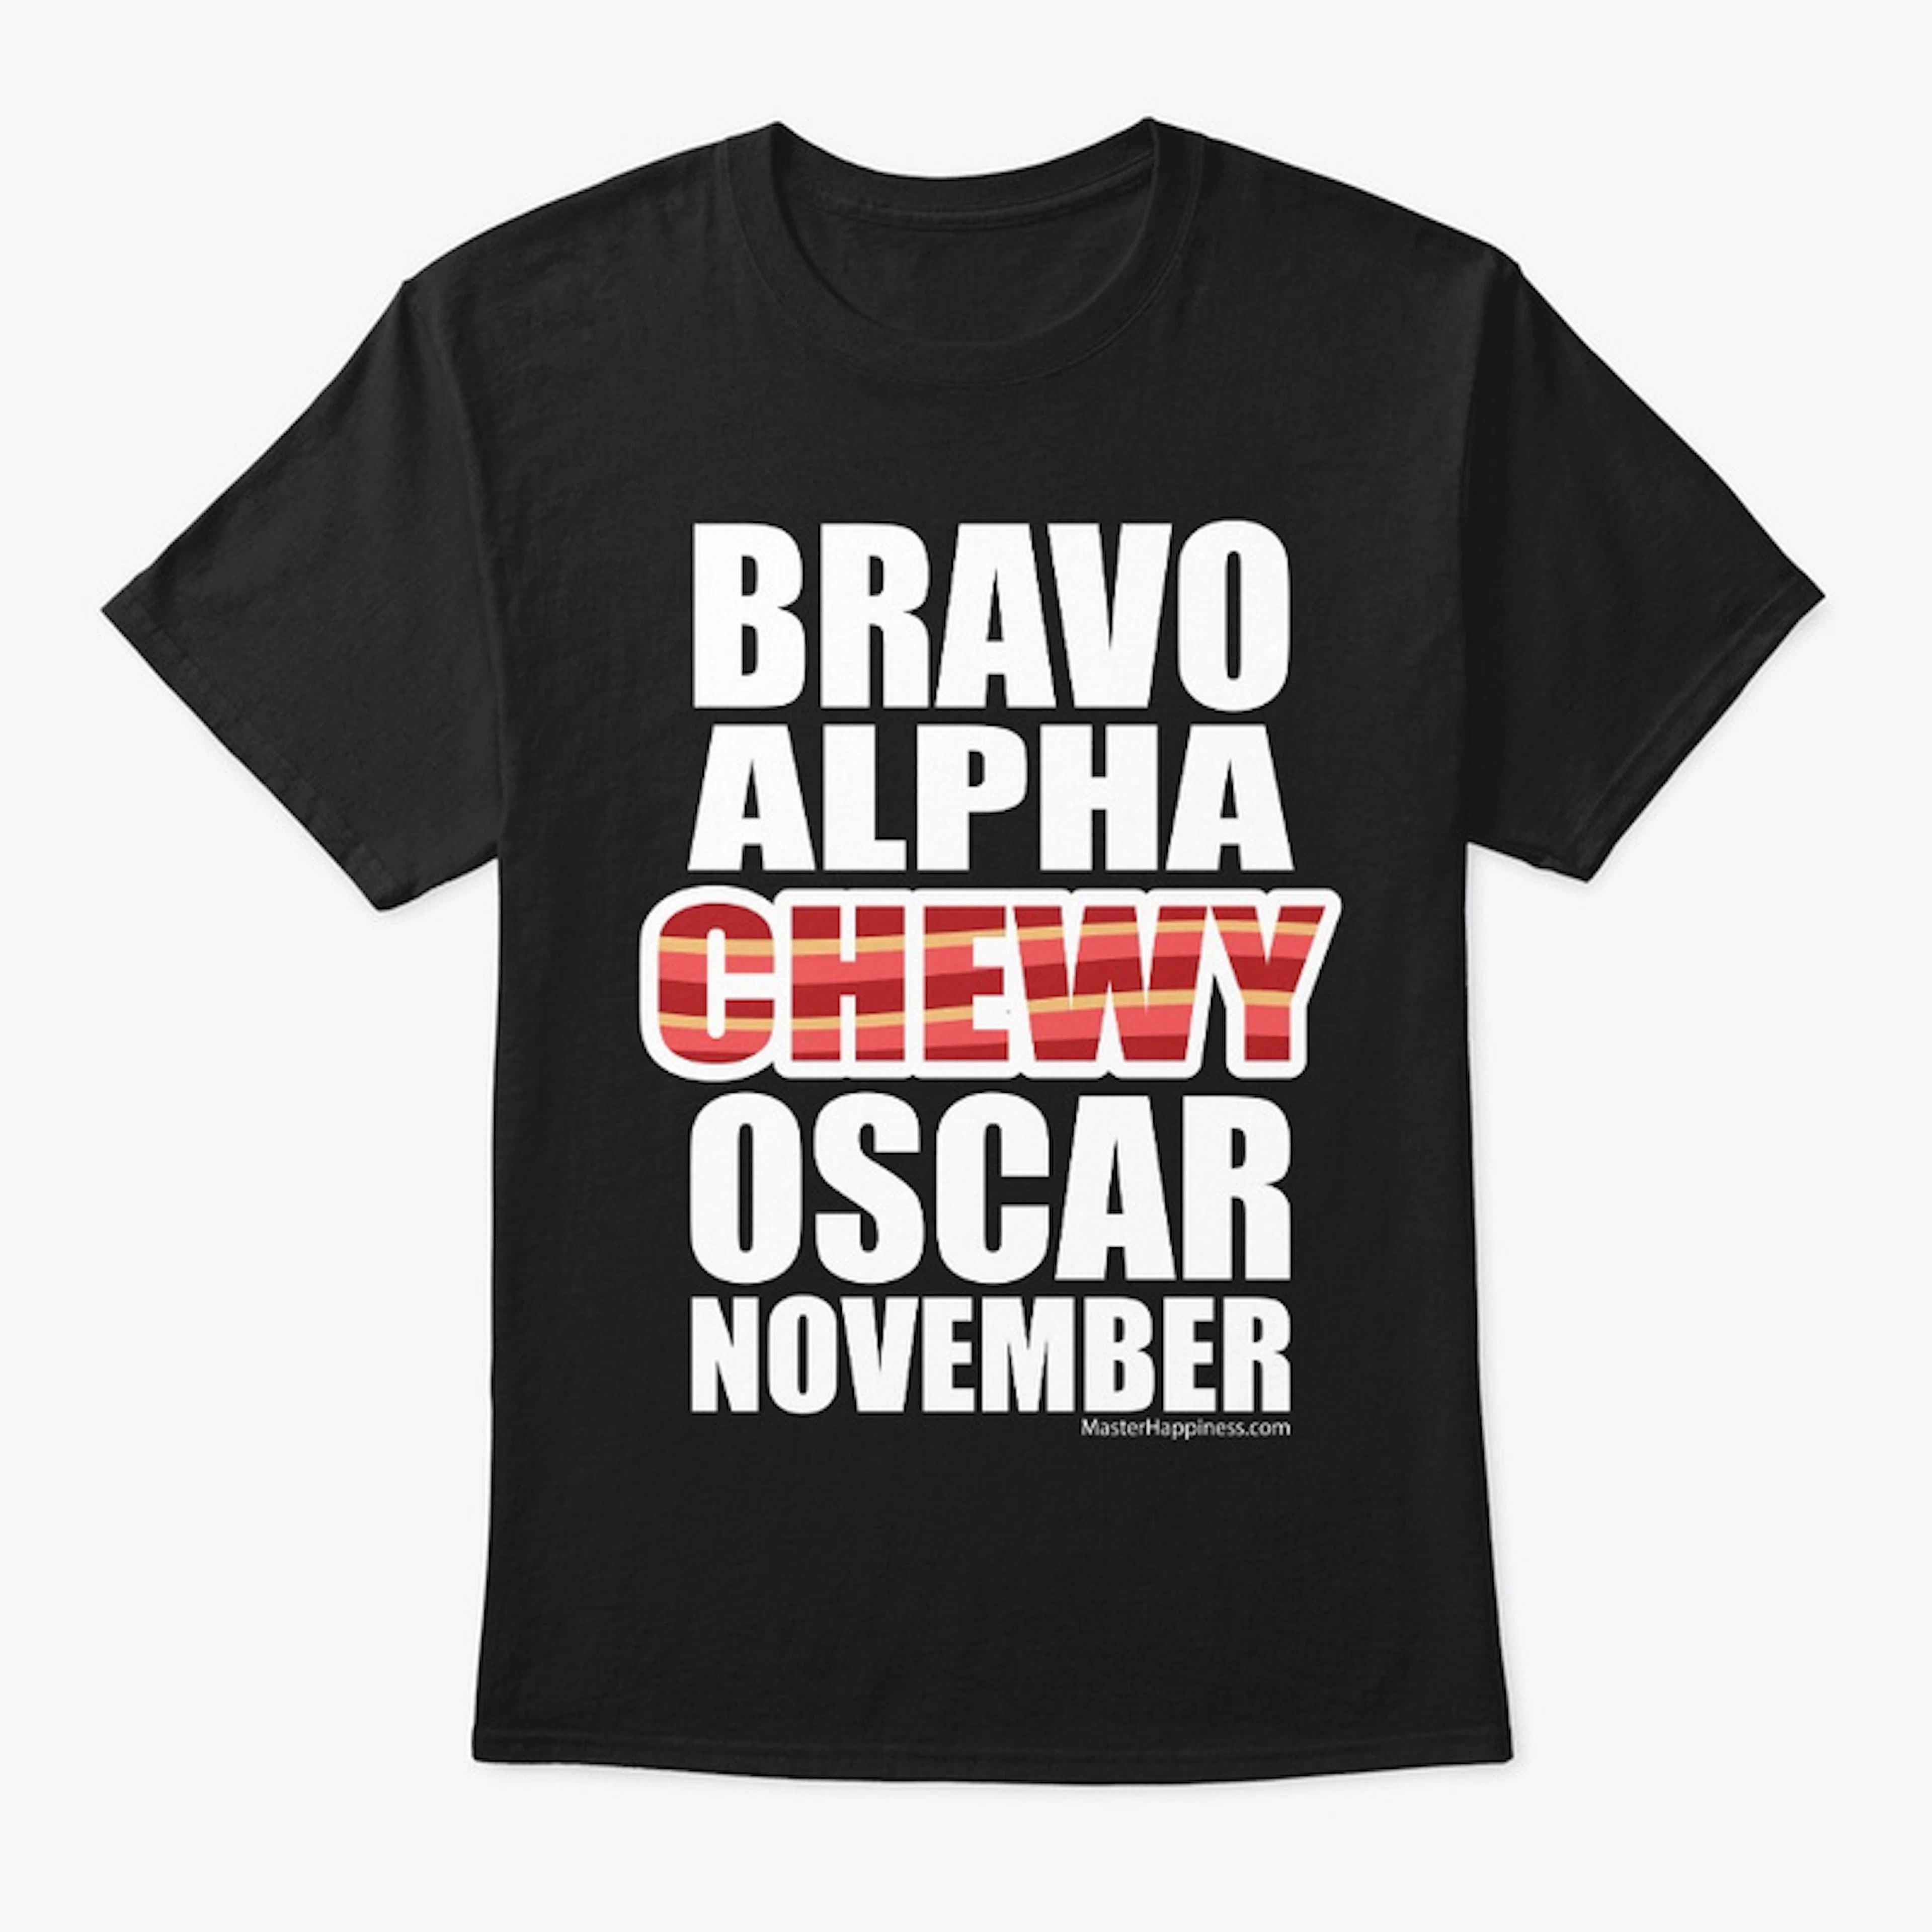 Bravo, Alpha, CHEWY, Oscar, November